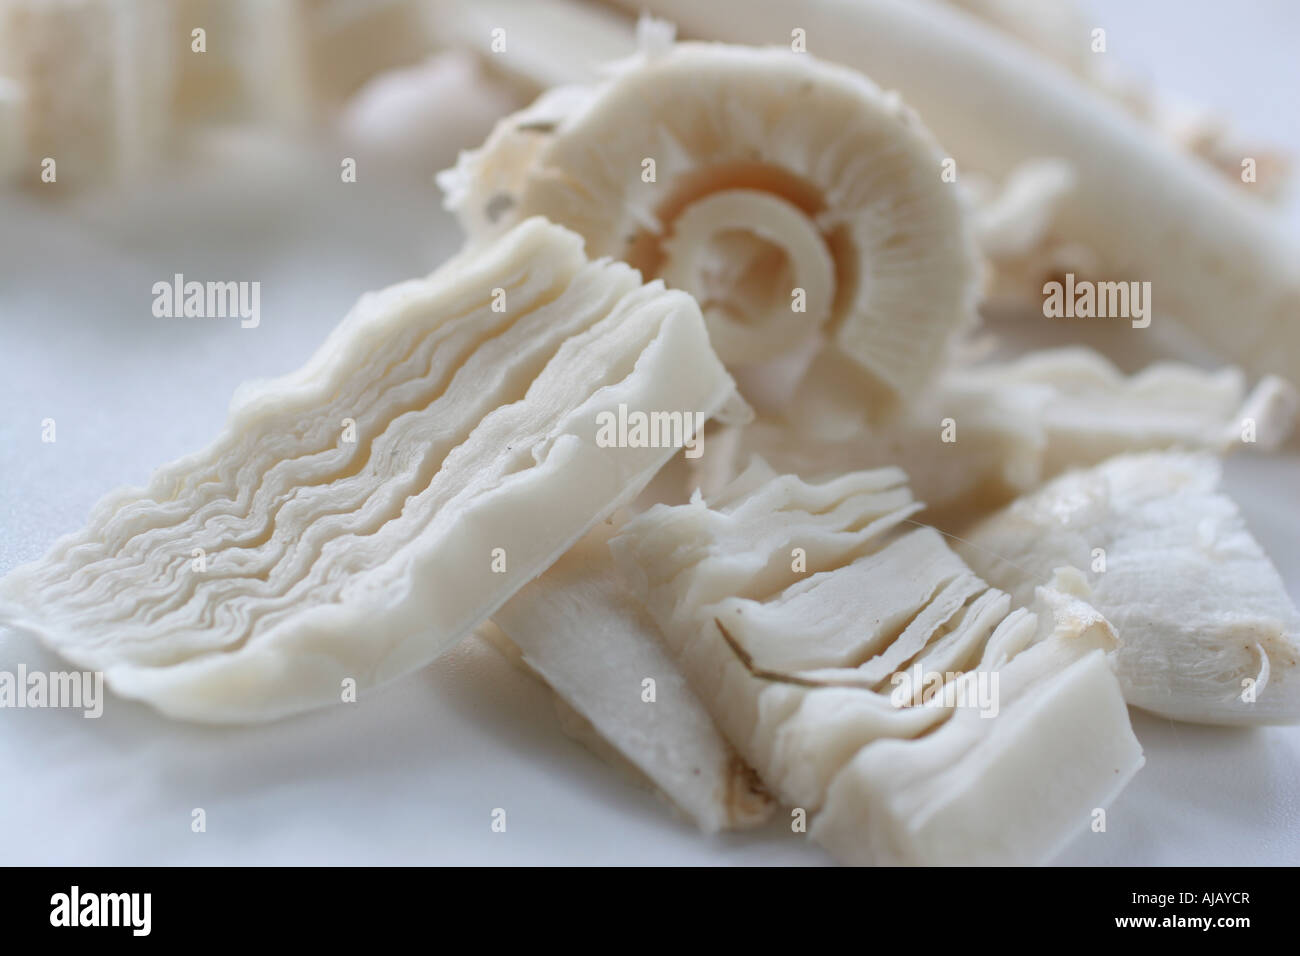 Shaggy mane mushroom sliced on white cutting board Stock Photo